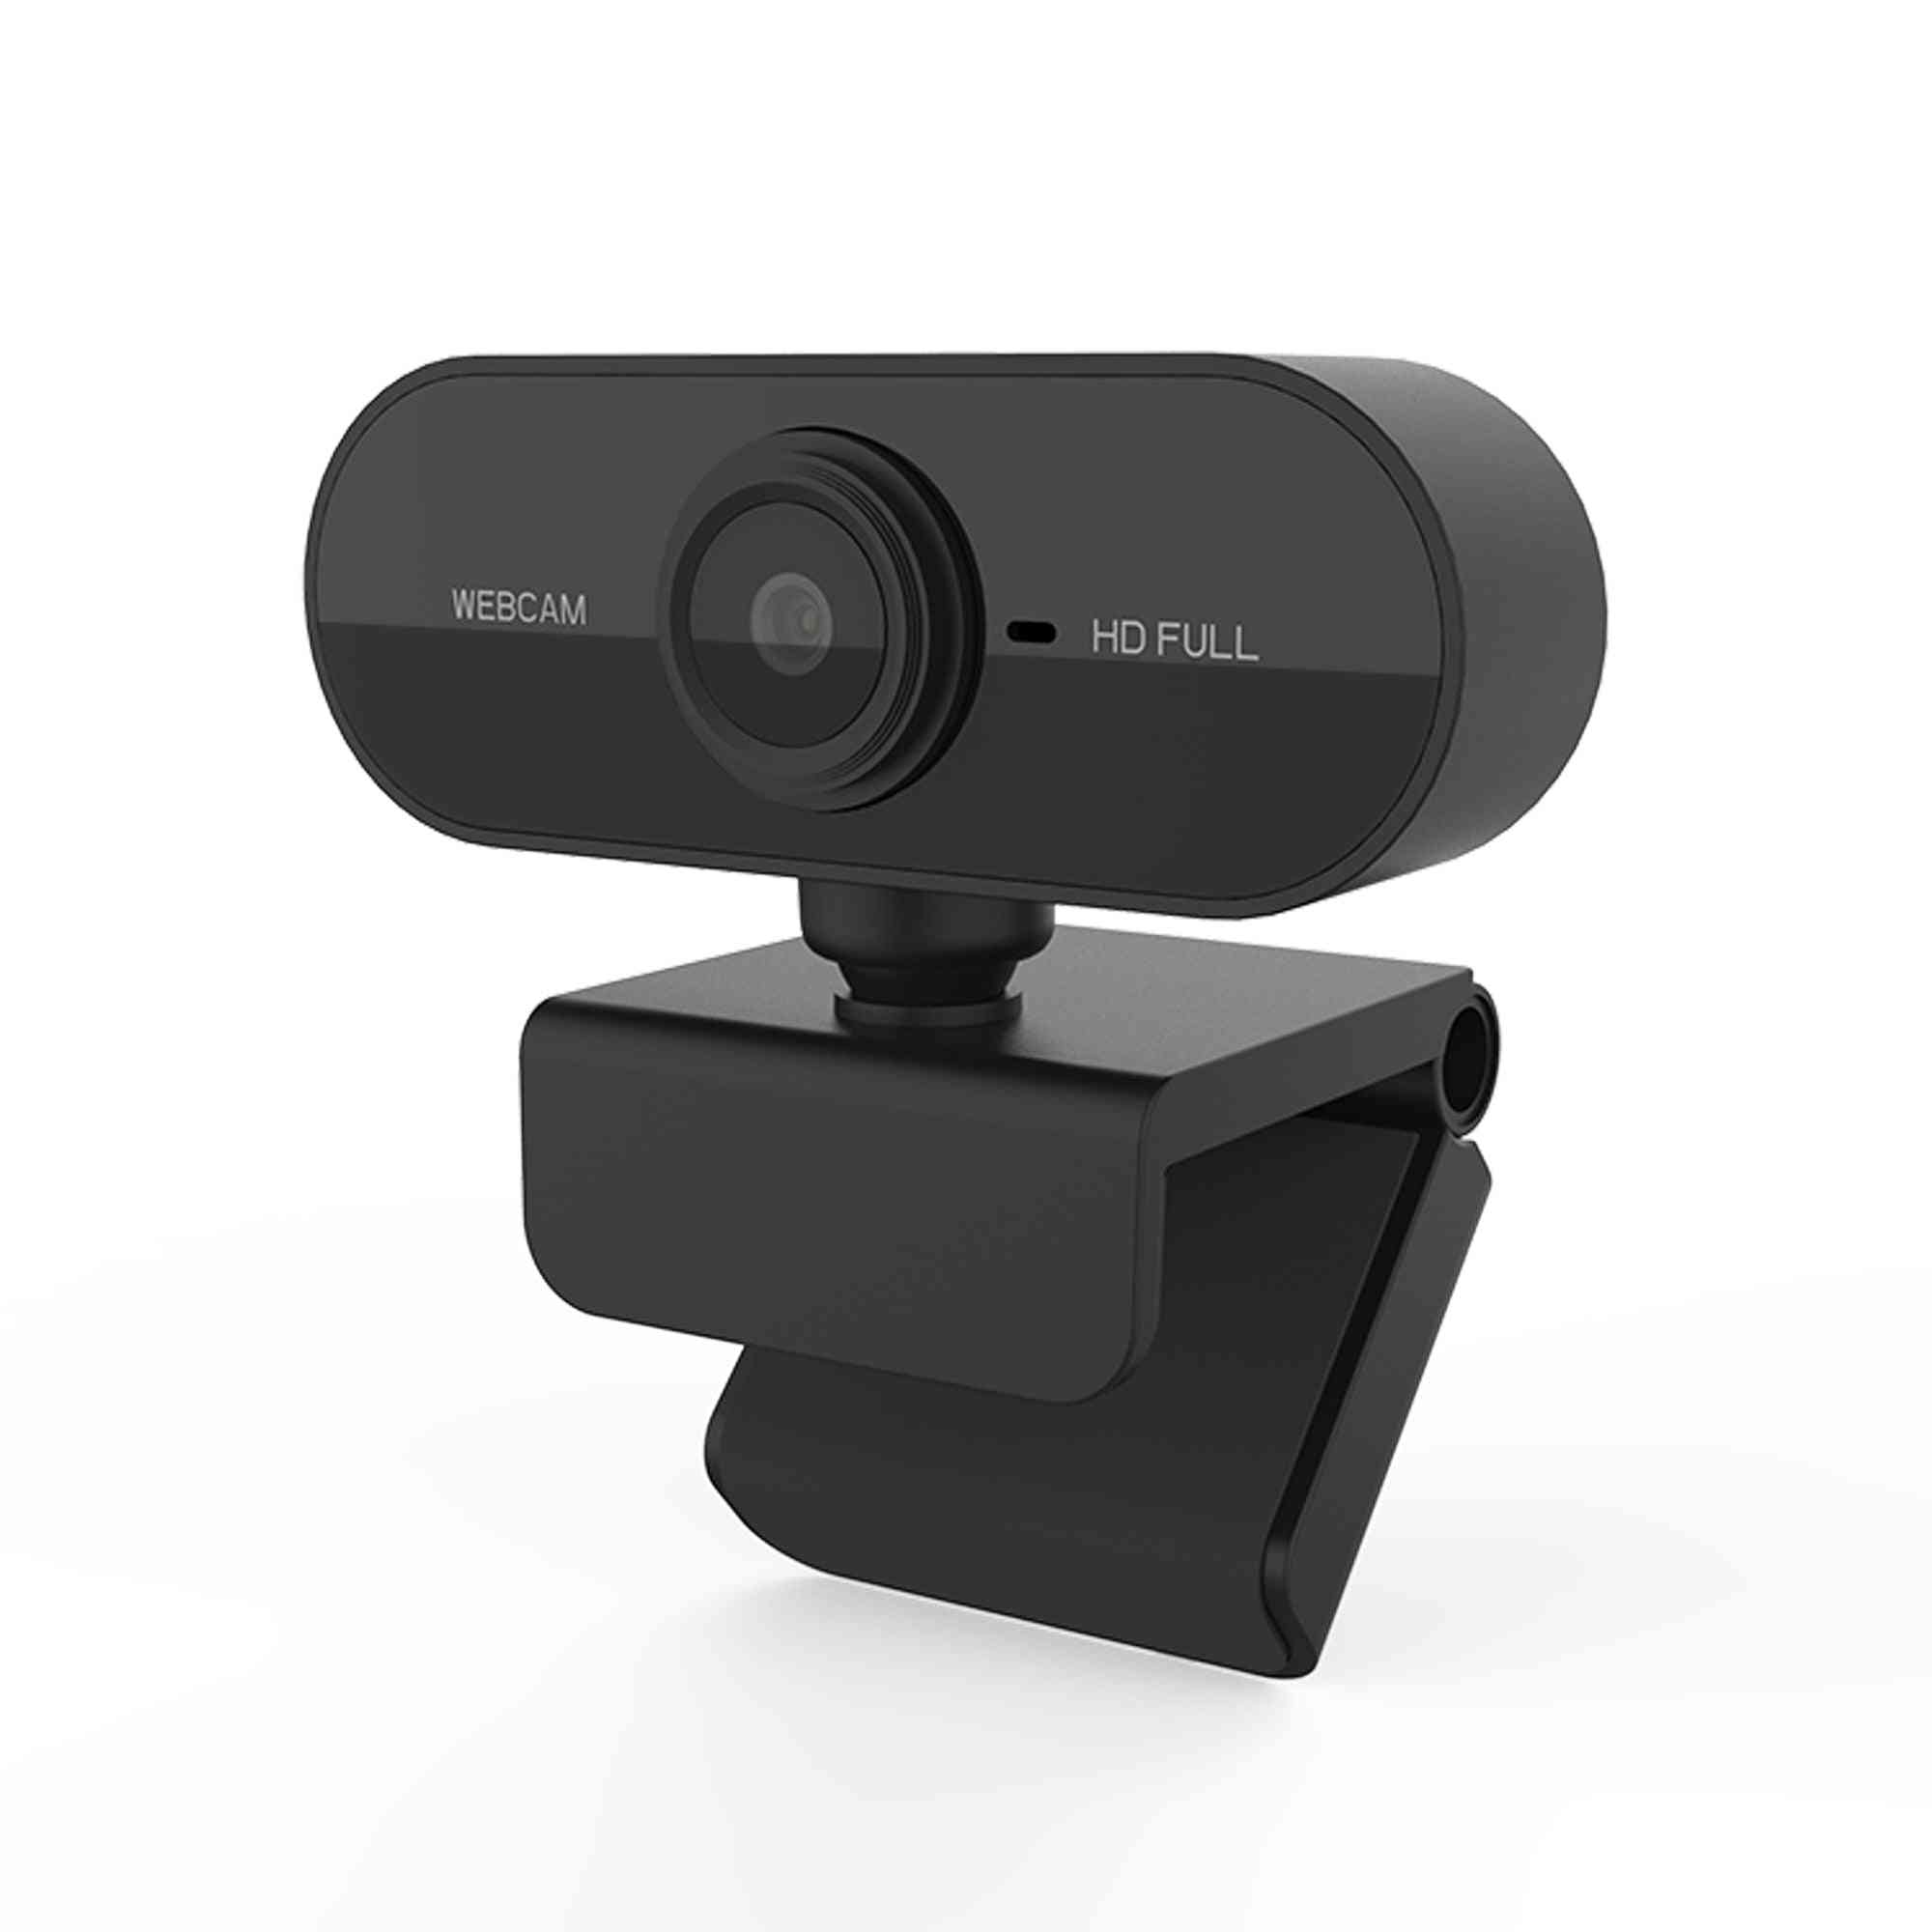 Mini cámara web con enfoque automático full hd 1080p web cam con micrófono